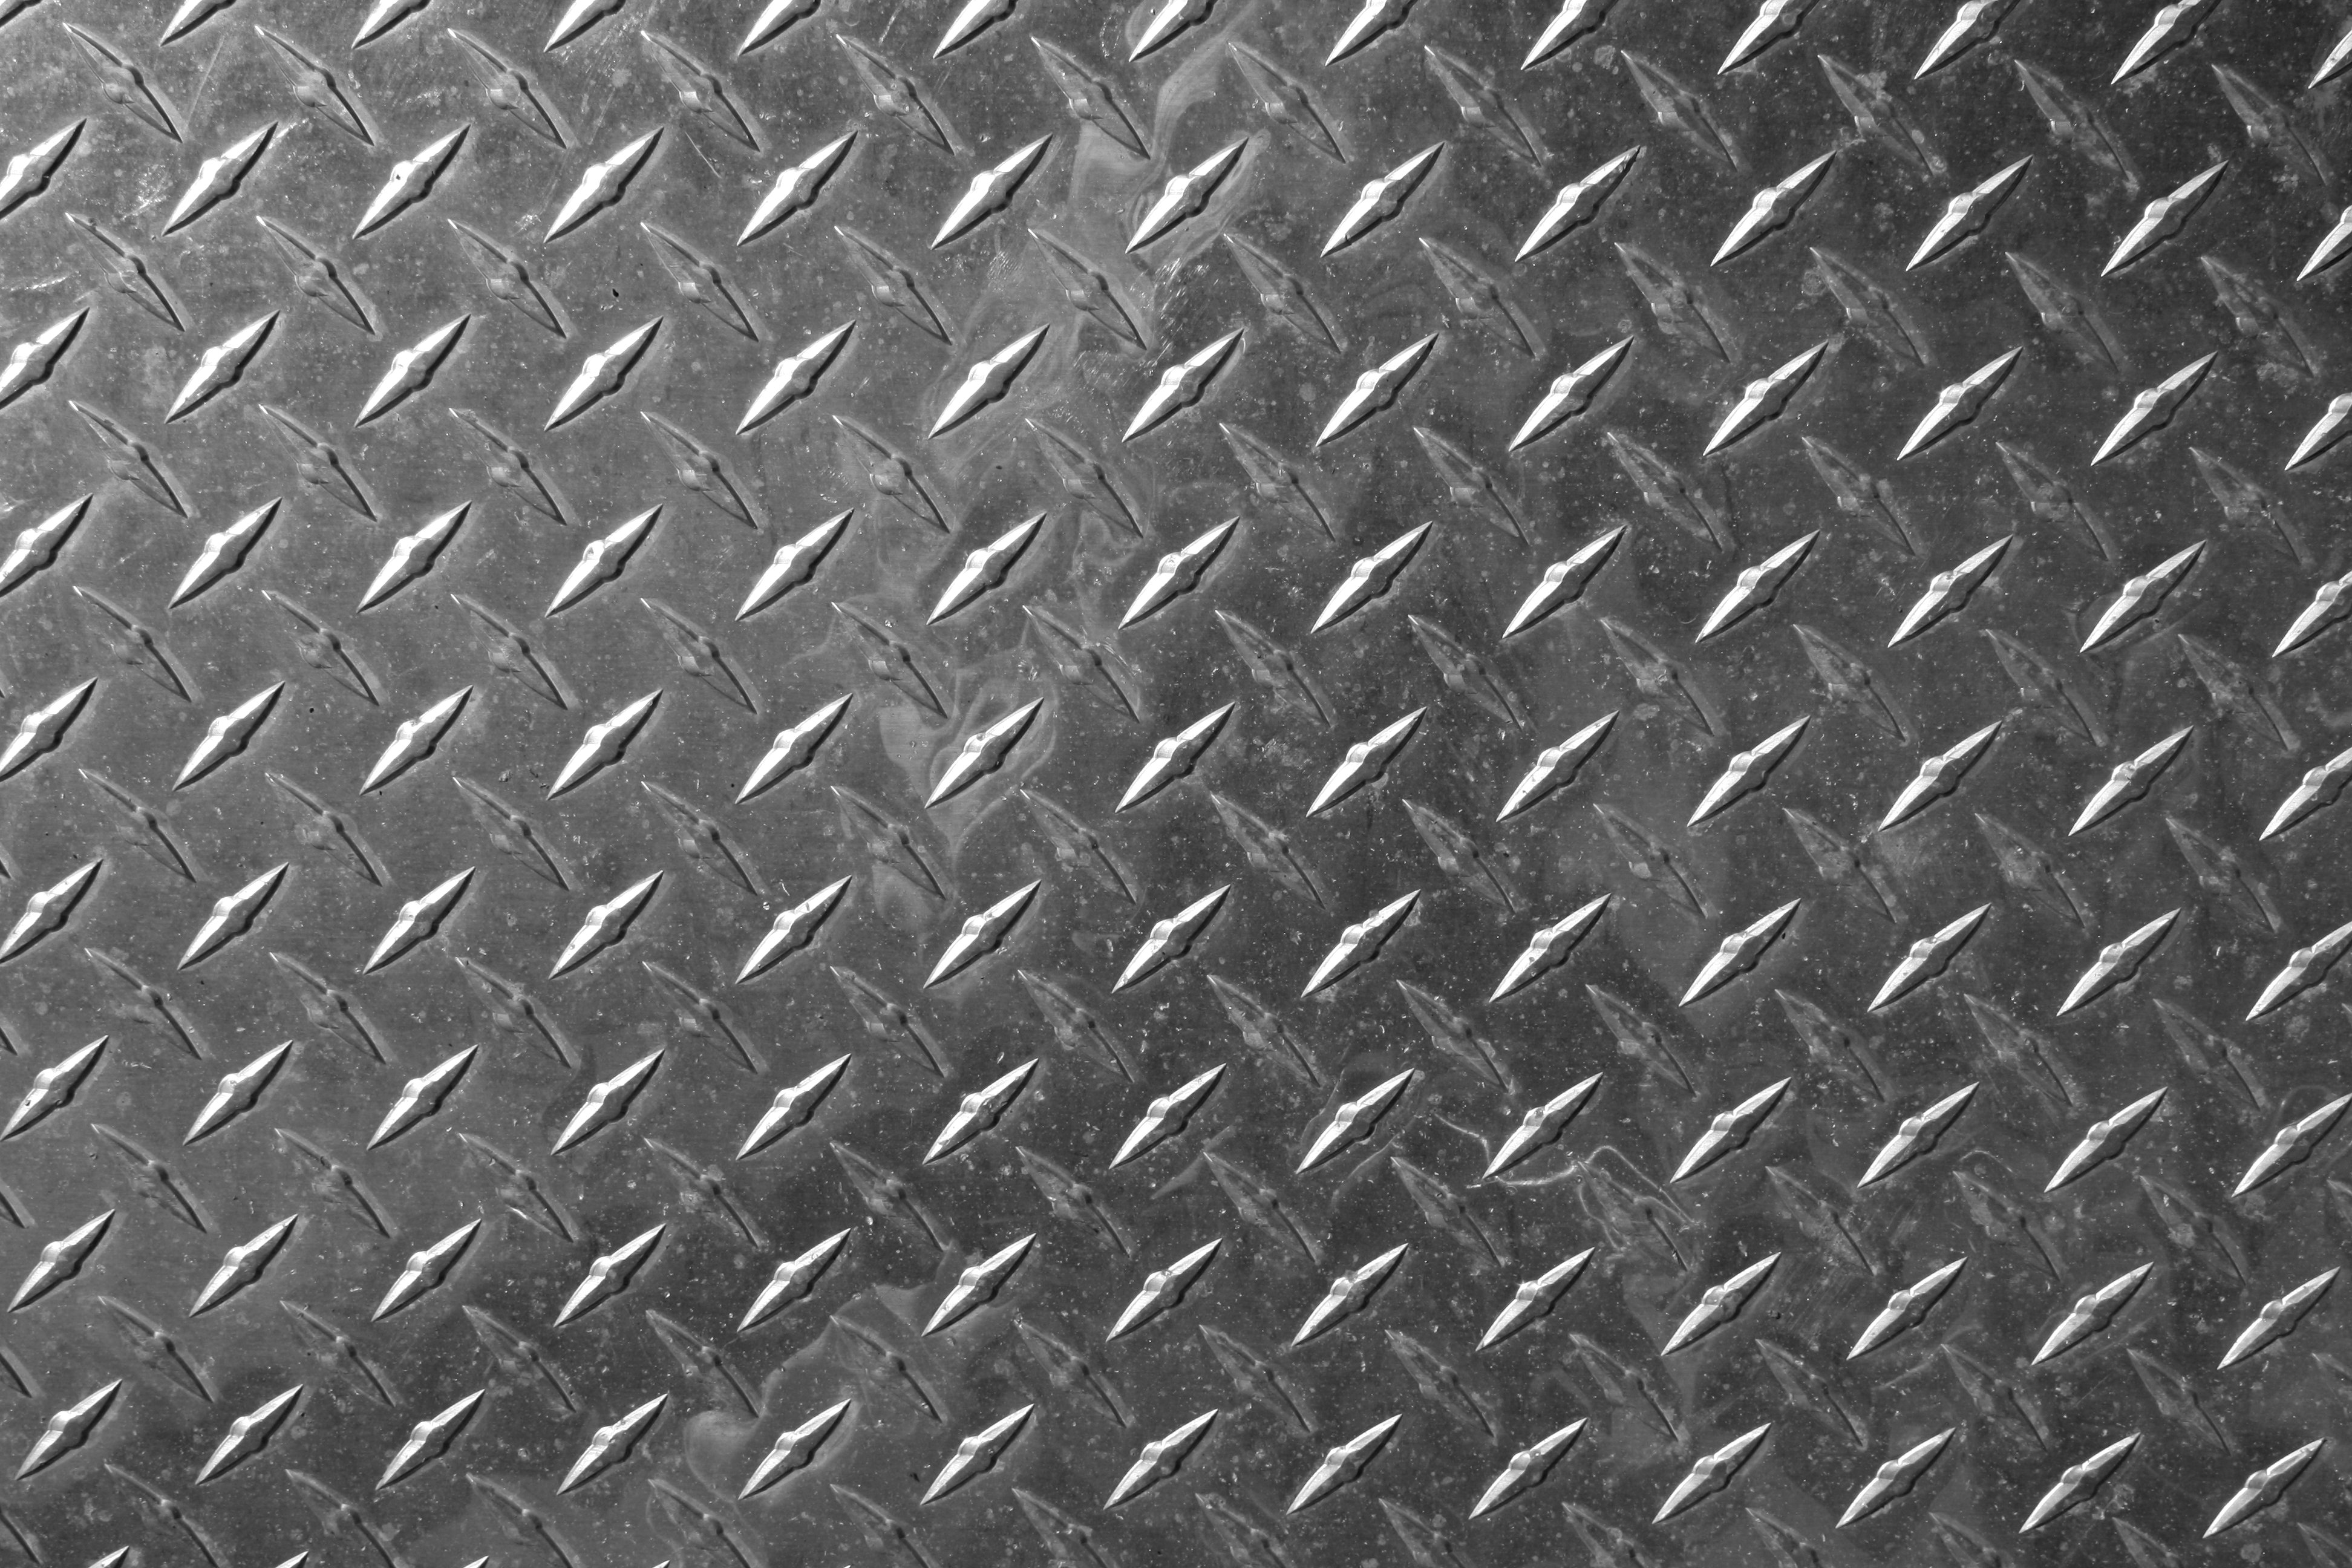 Silver Textured Sheet Metal Texture Picture Photograph Photos